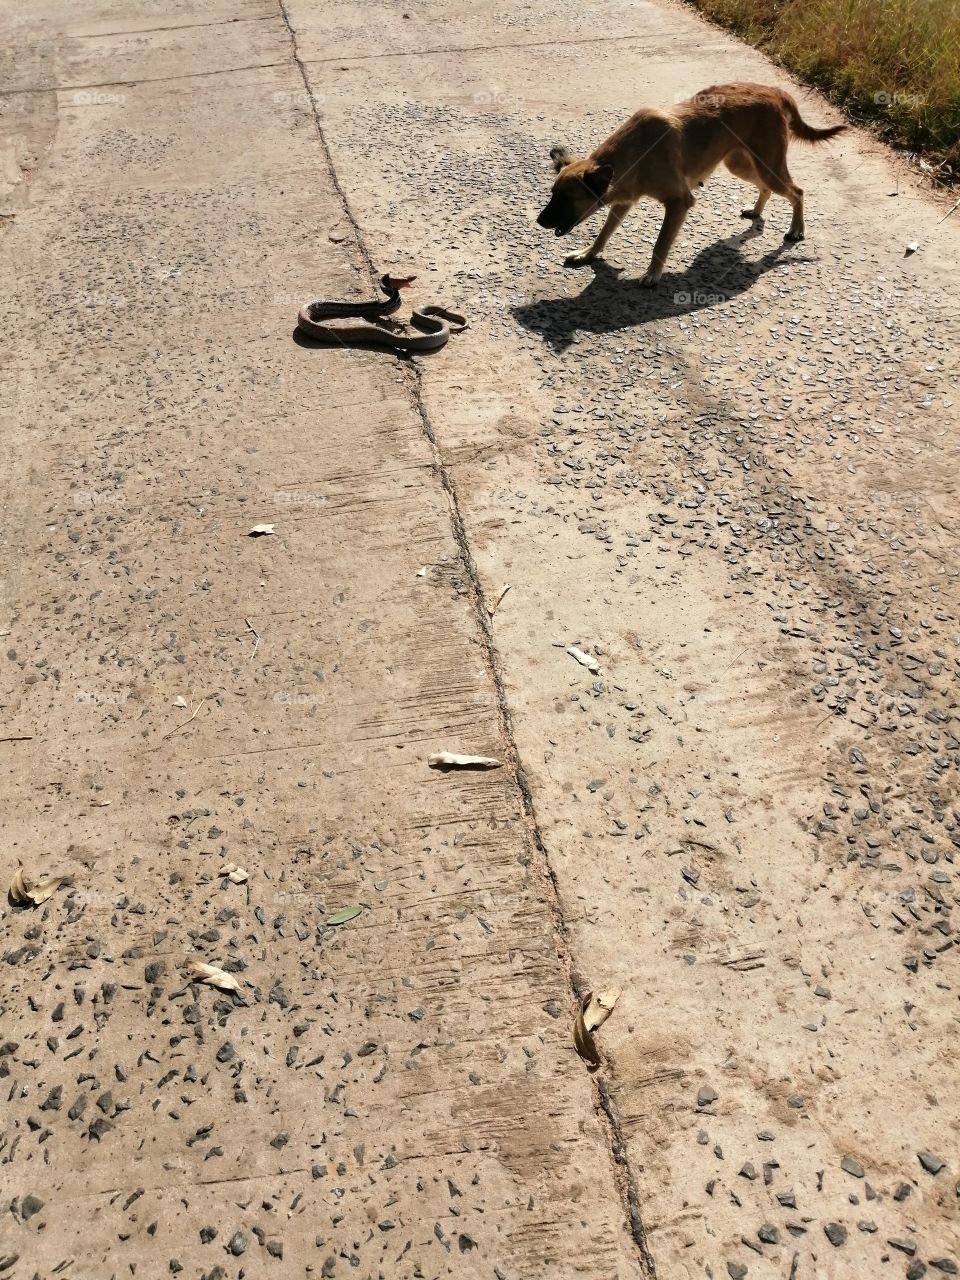 Snake dog with cobra